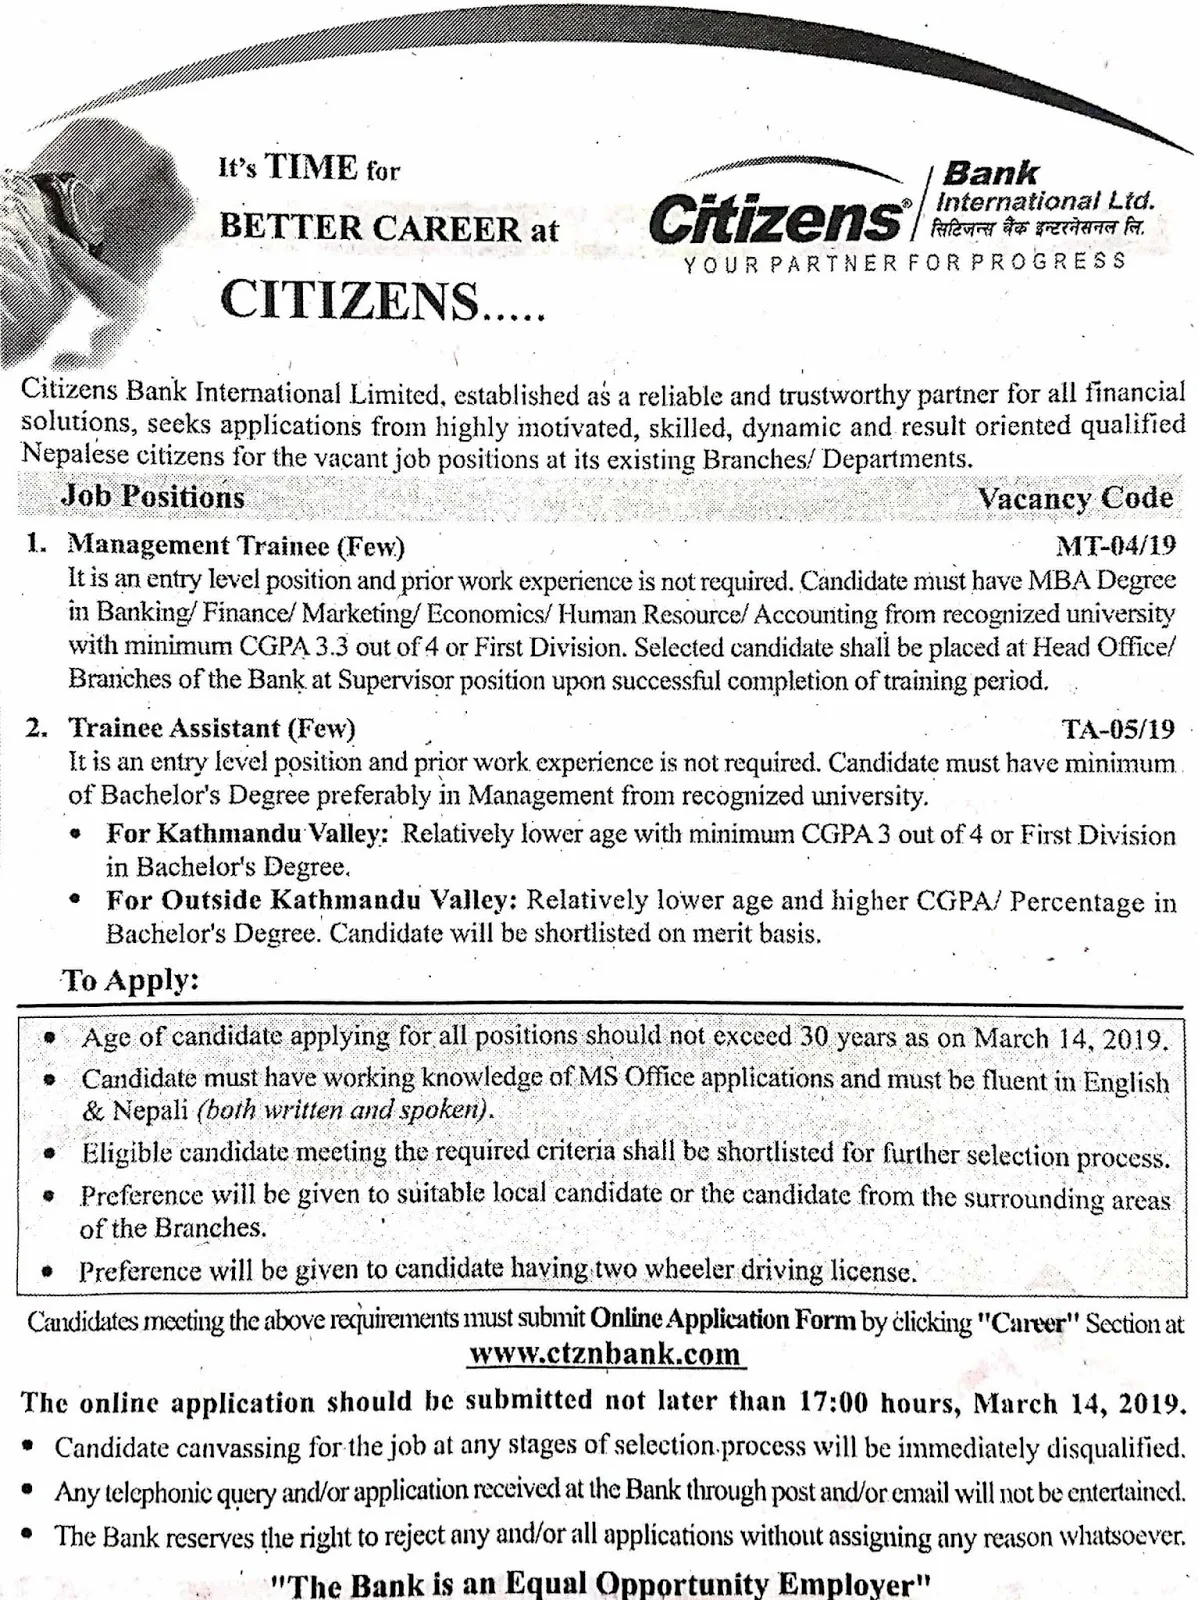 Citizens Bank International Vacancy Notice